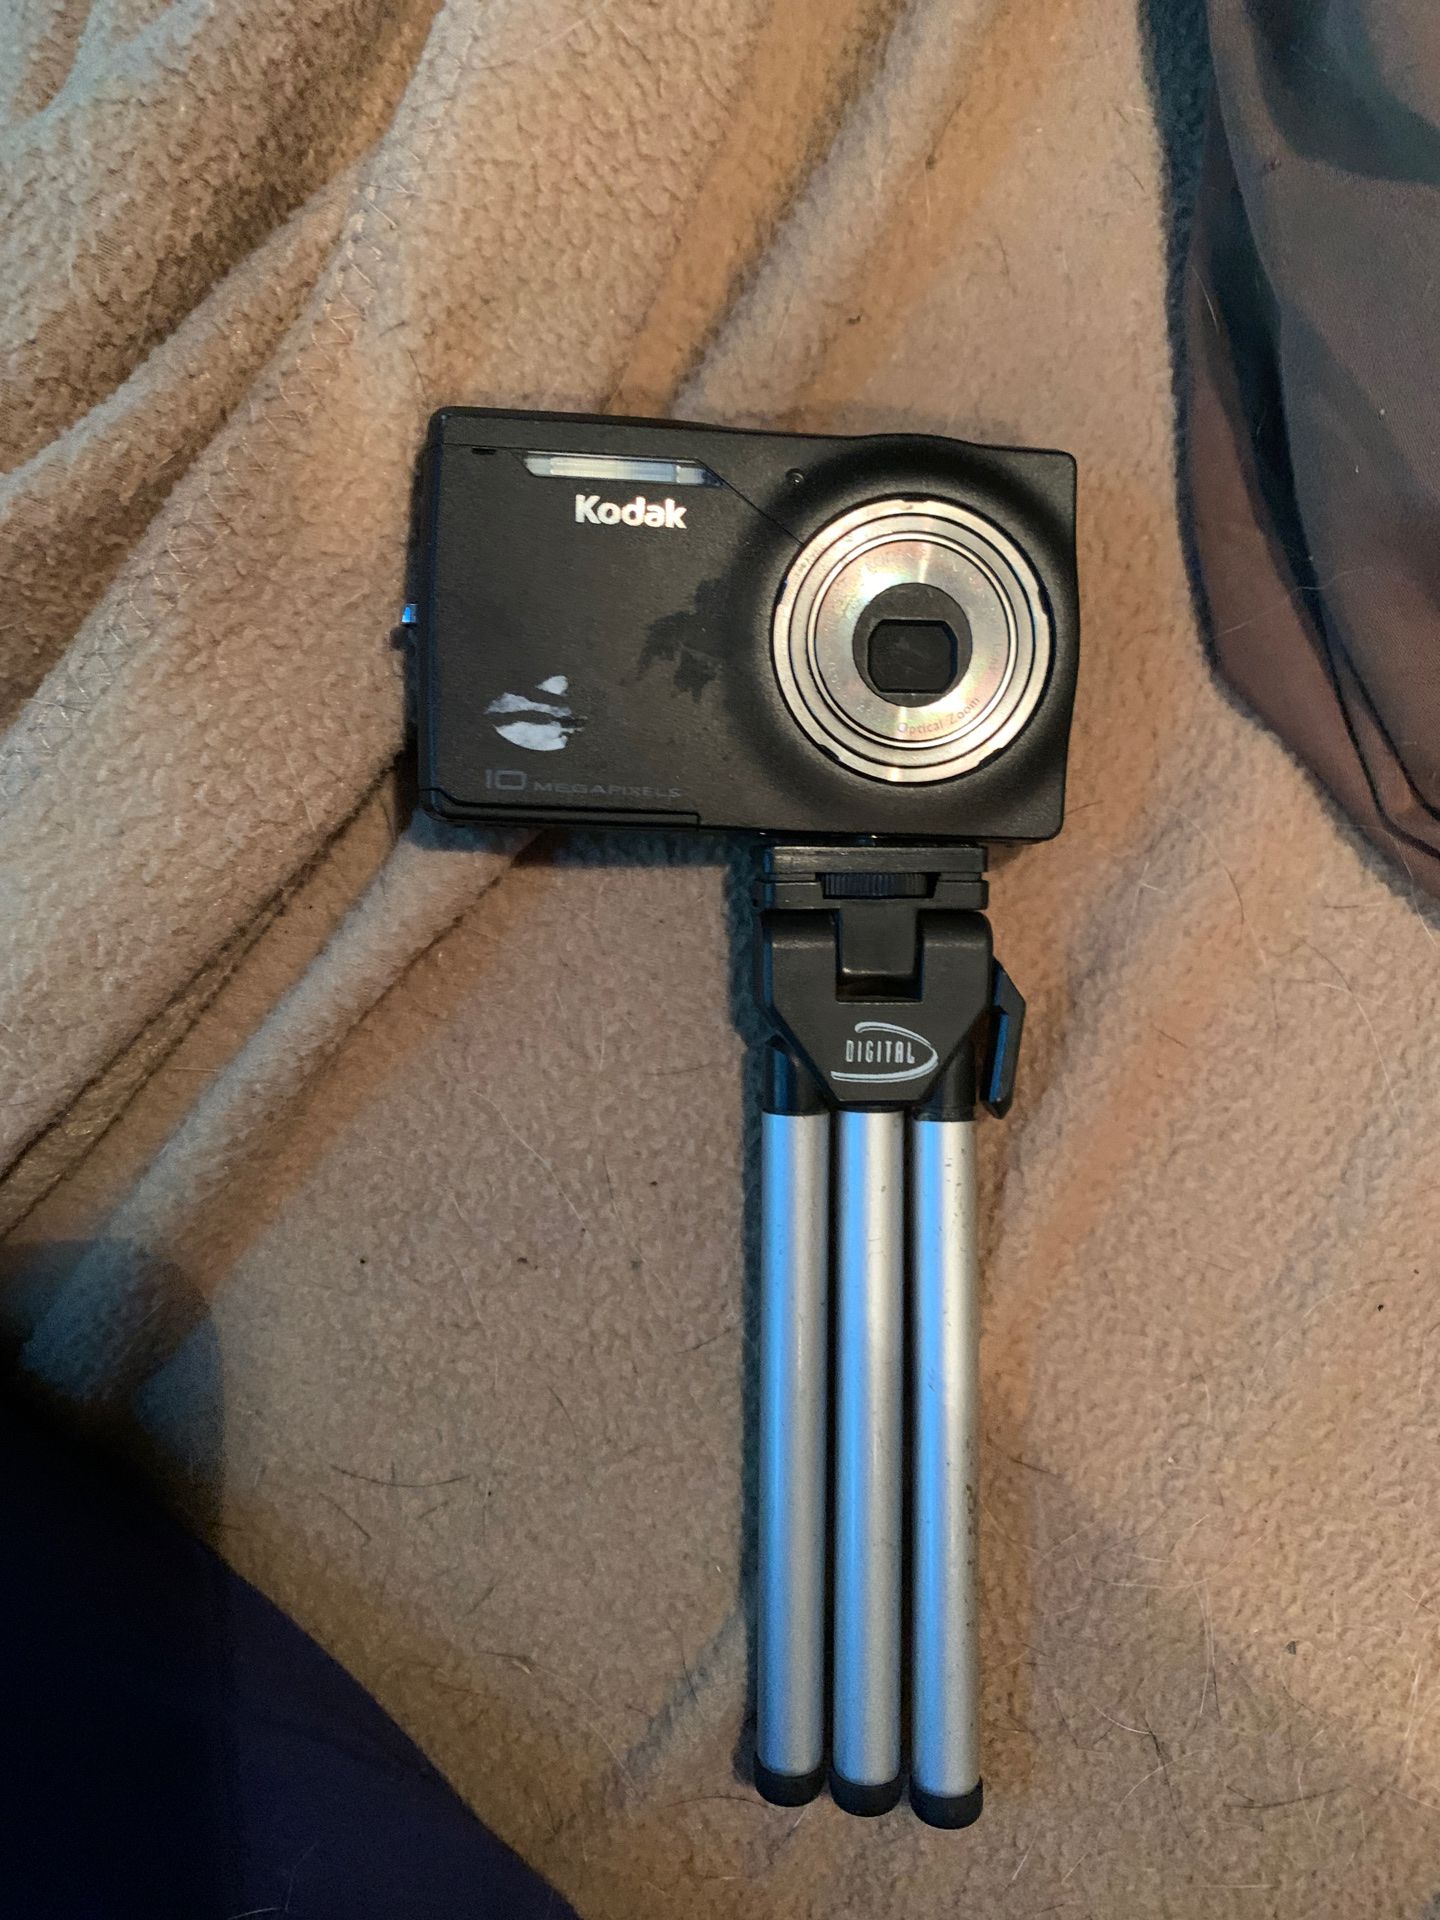 Kodak camera with tripod